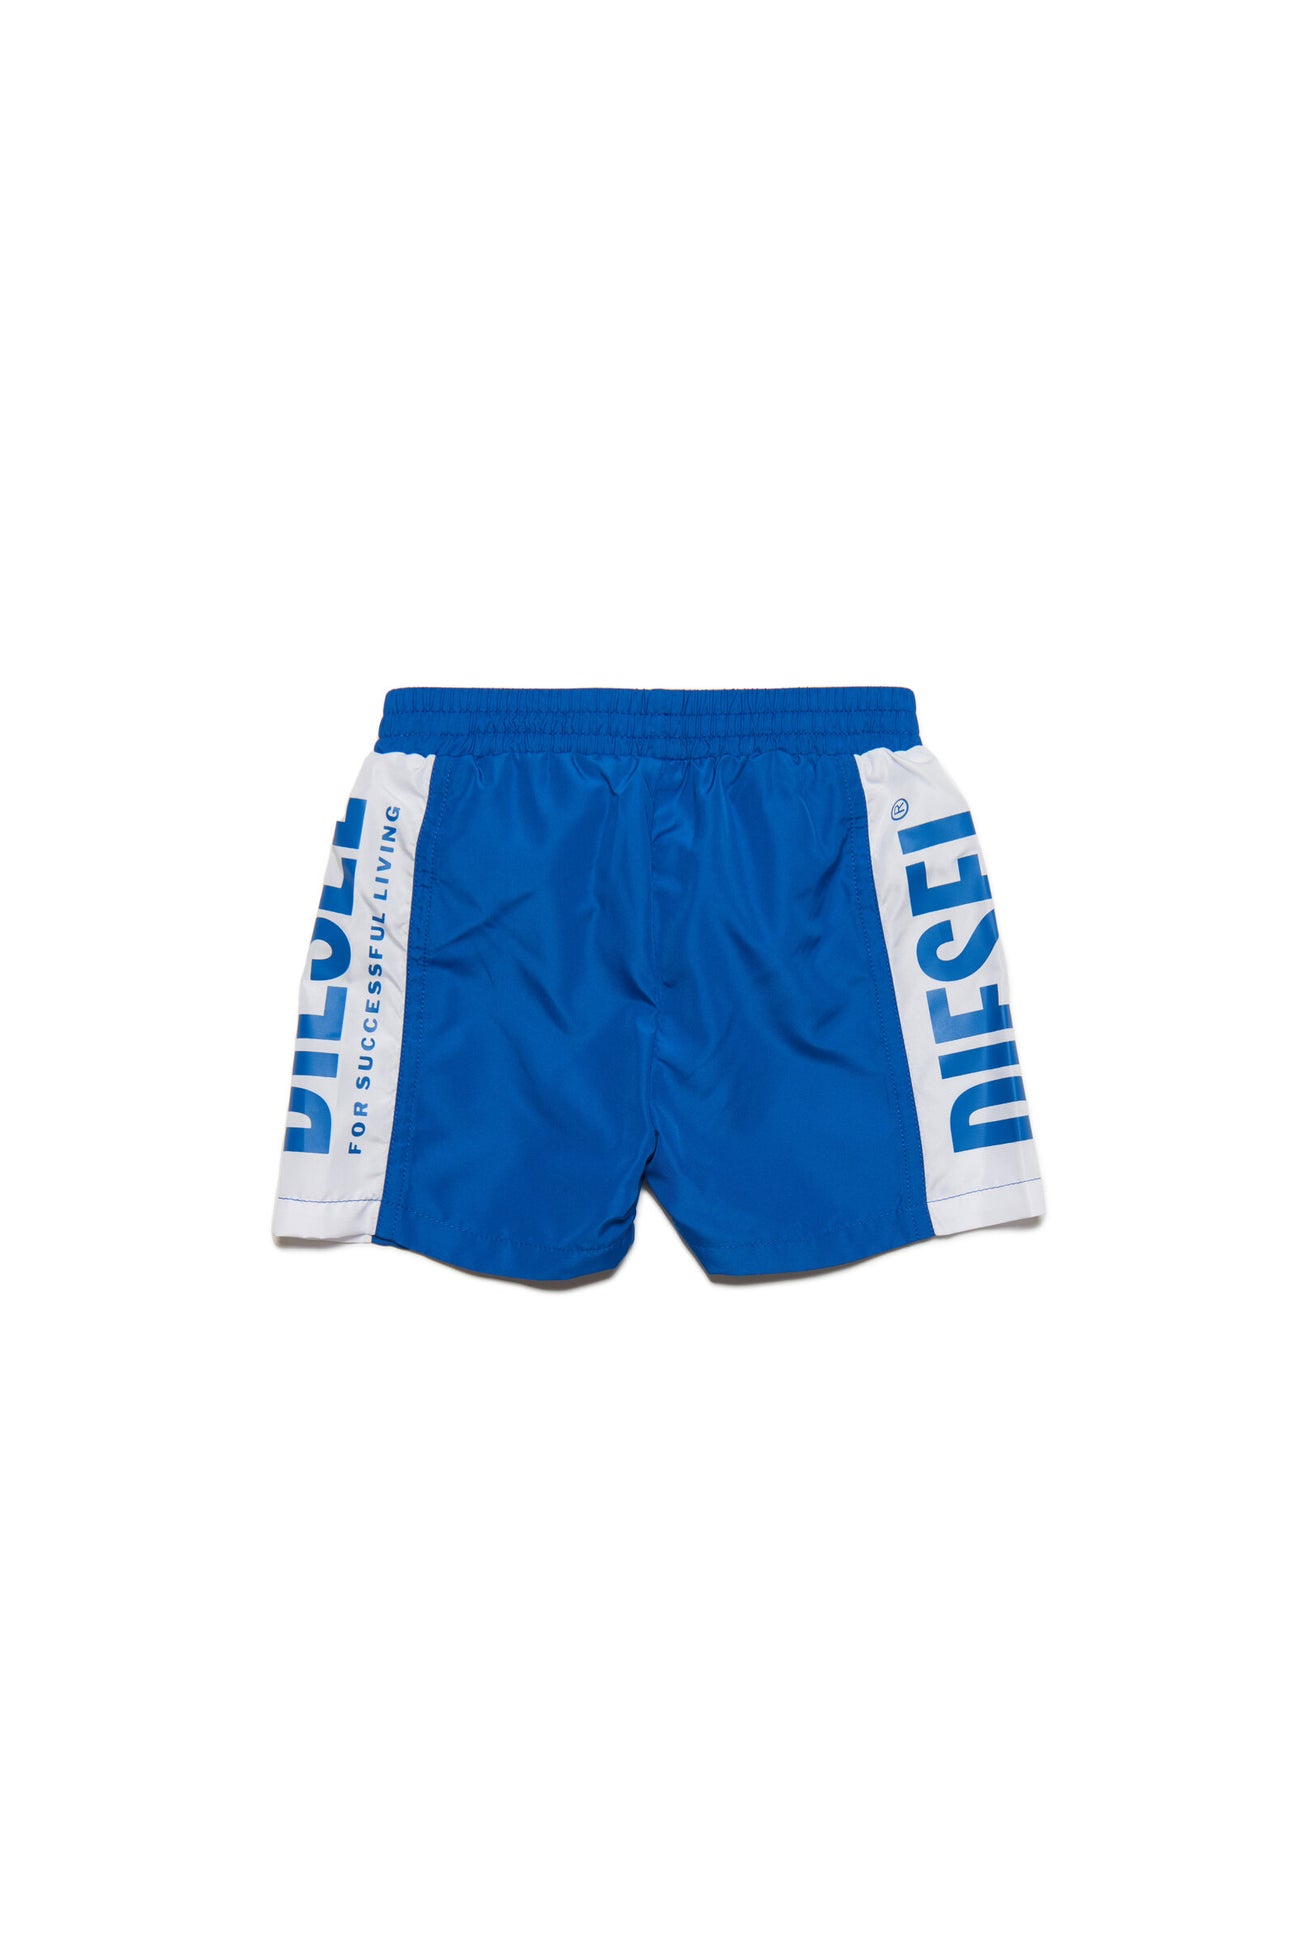 Blue lycra boxer shorts with logo band Blue lycra boxer shorts with logo band